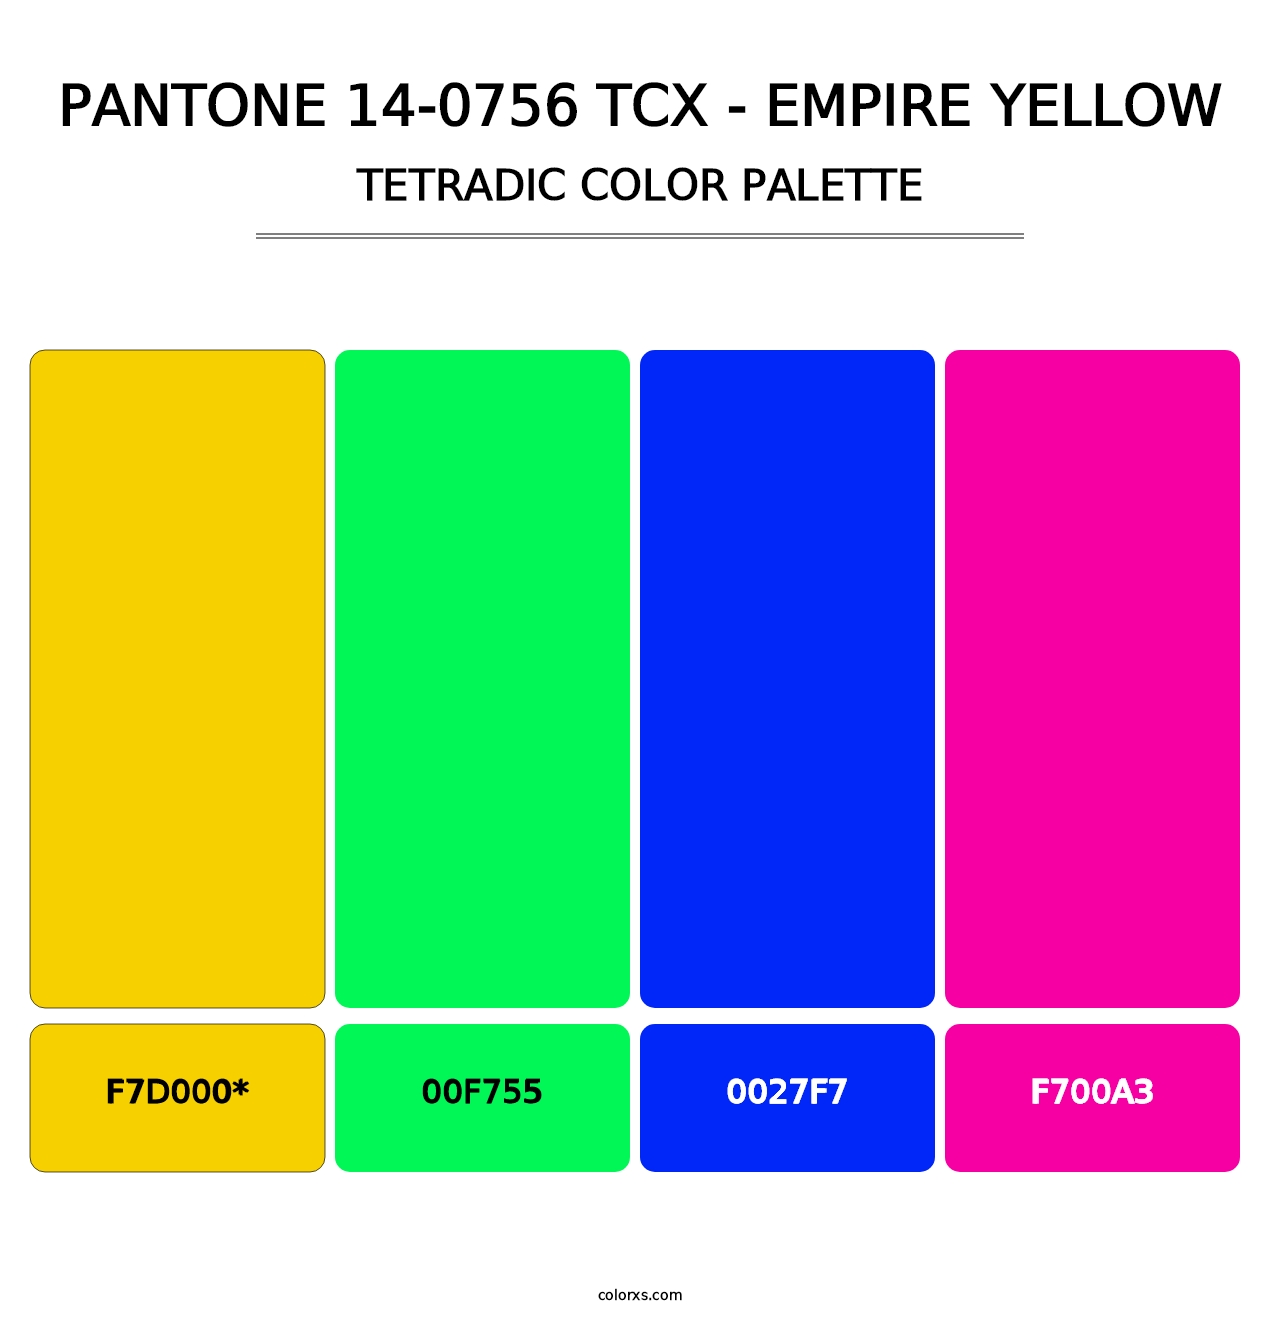 PANTONE 14-0756 TCX - Empire Yellow - Tetradic Color Palette